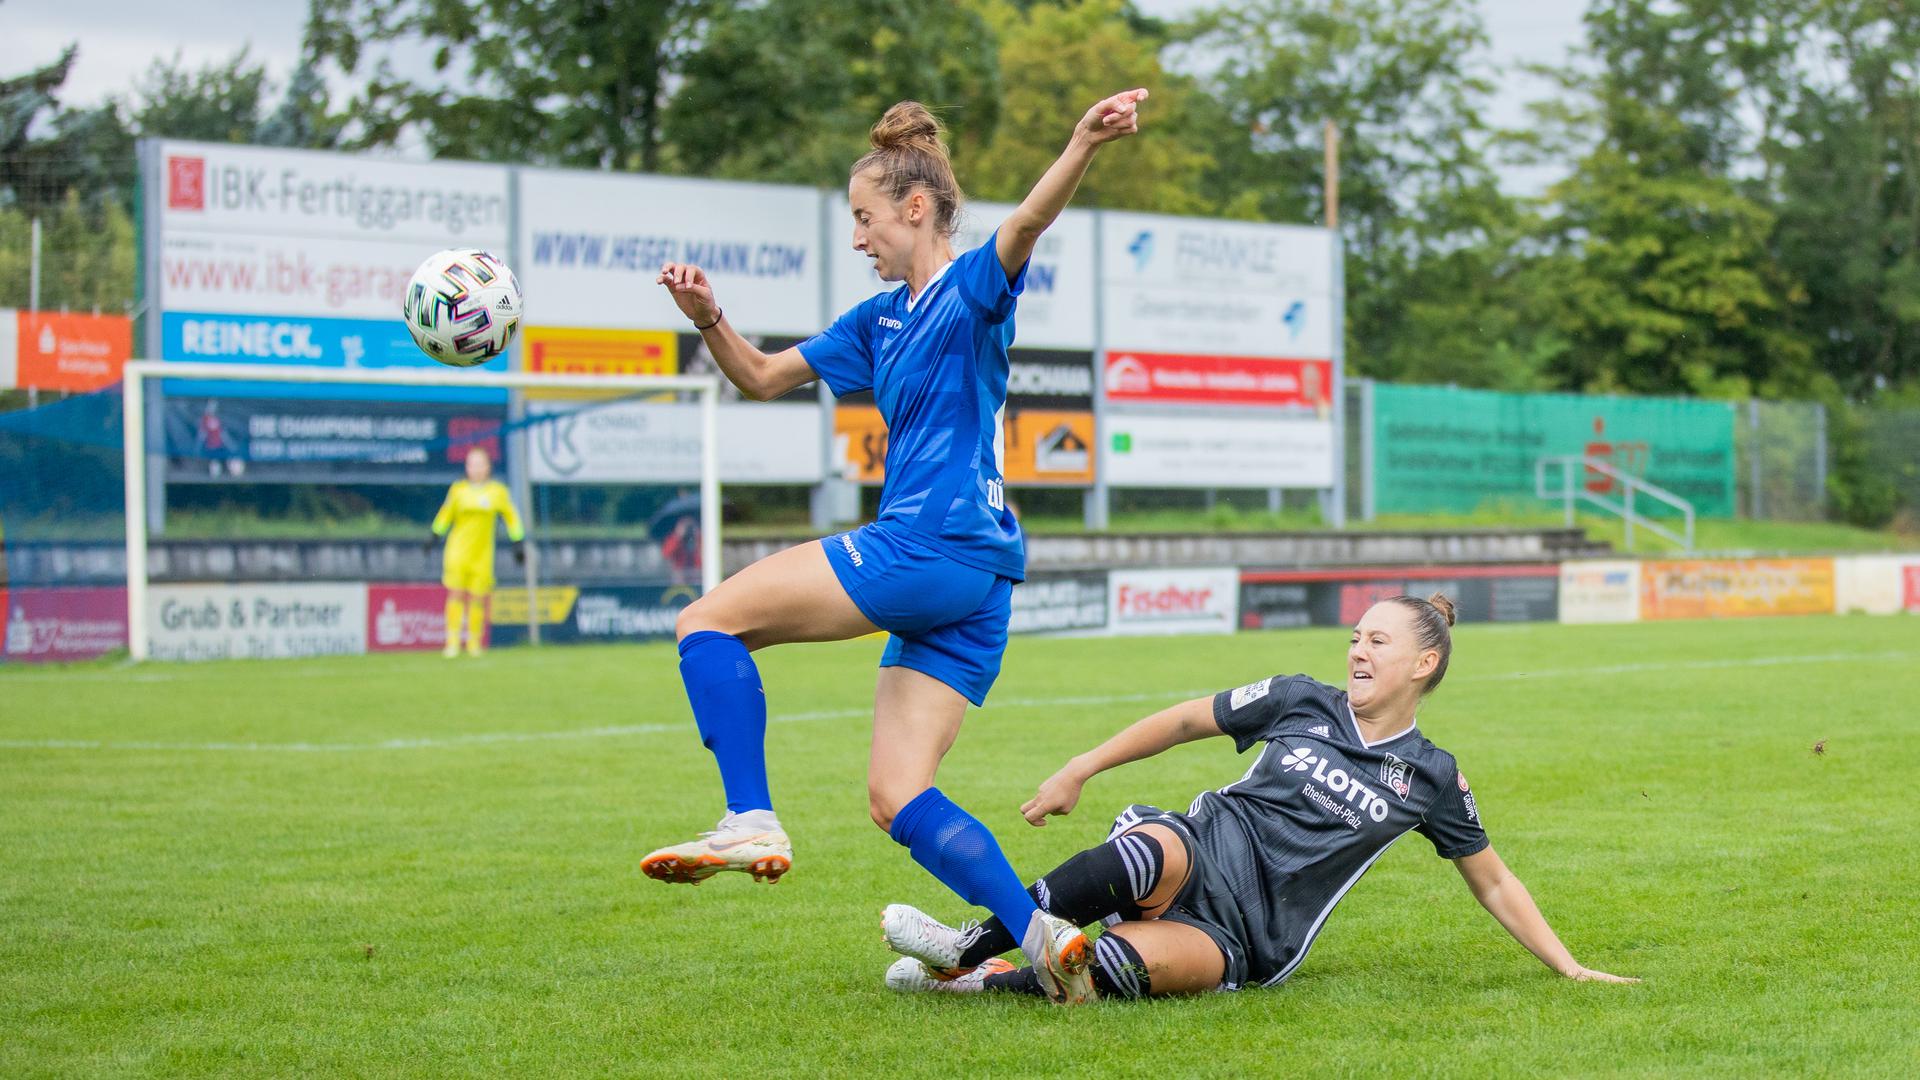 Foto: Simone Kochanek; Bruchsal; DEU; 22.08.2021; Fussball, DFB-Pokal Frauen: Karsruher SC - 1. FFC Niederkirchen; rechts: Natalie Klupp (1. FFC Niederkirchen, #23), links: Pia Zuefle (Karlsruher SC, #6)